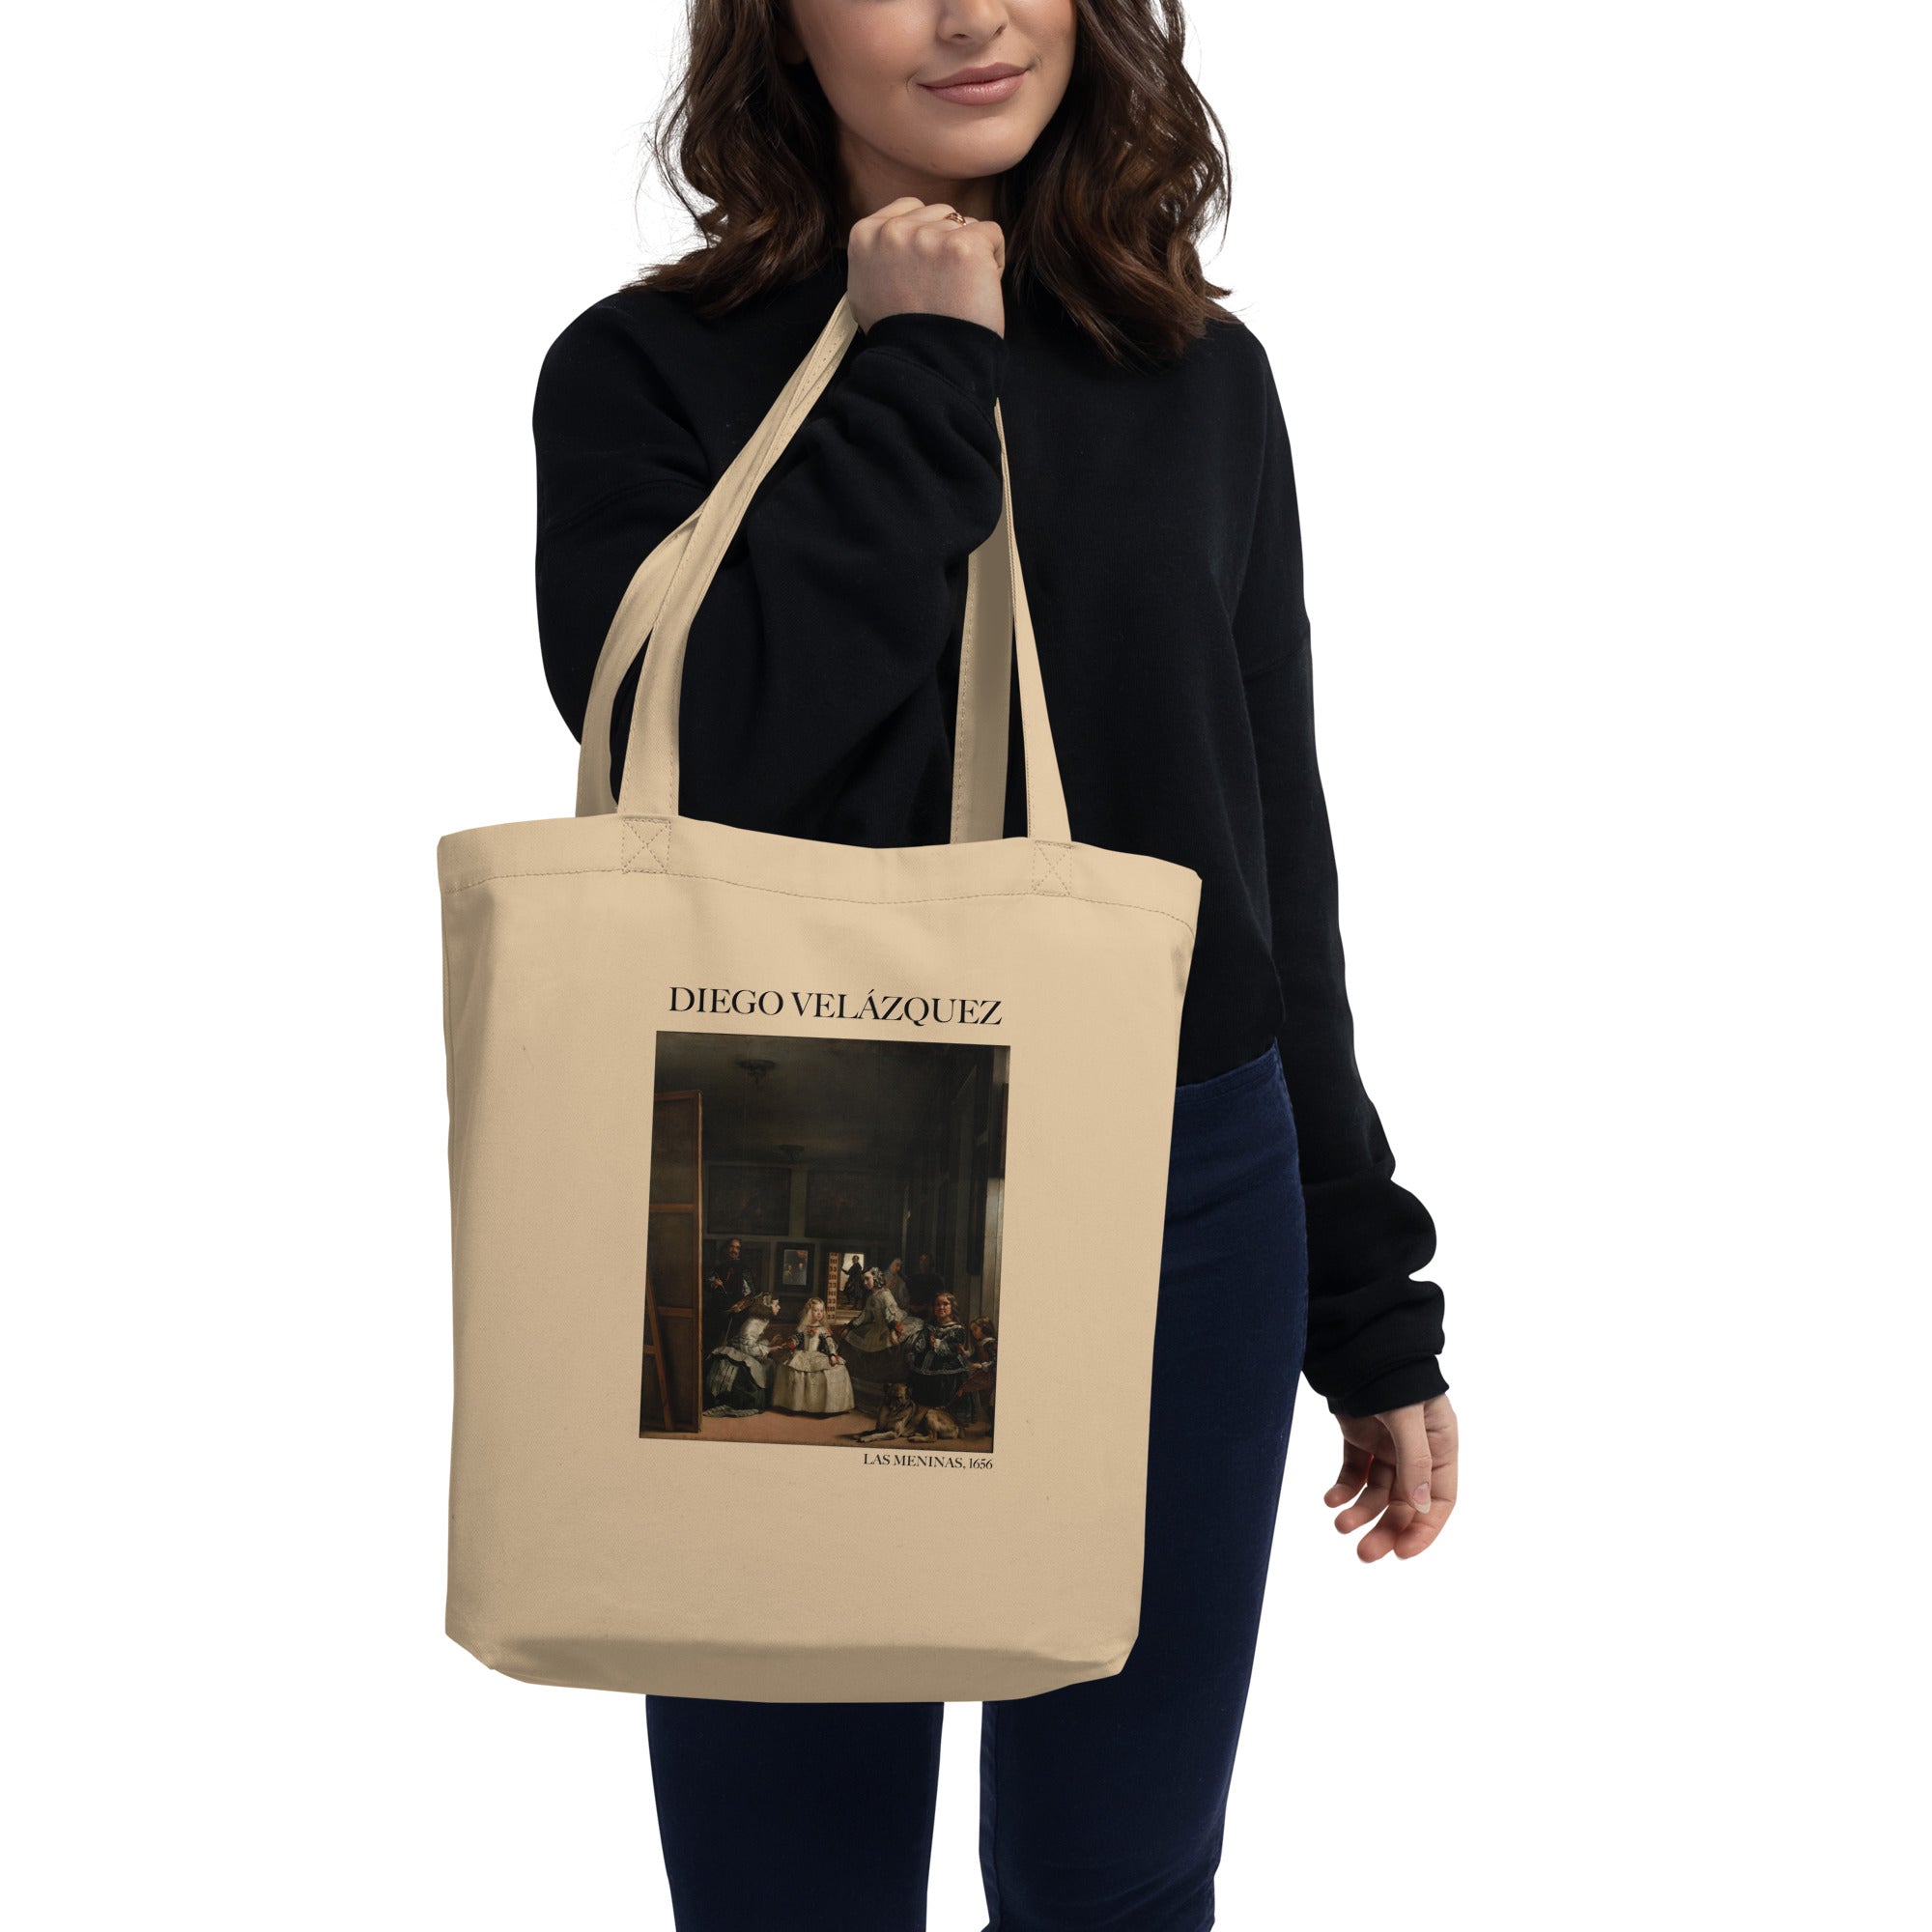 Diego Velázquez 'Las Meninas' Famous Painting Totebag | Eco Friendly Art Tote Bag